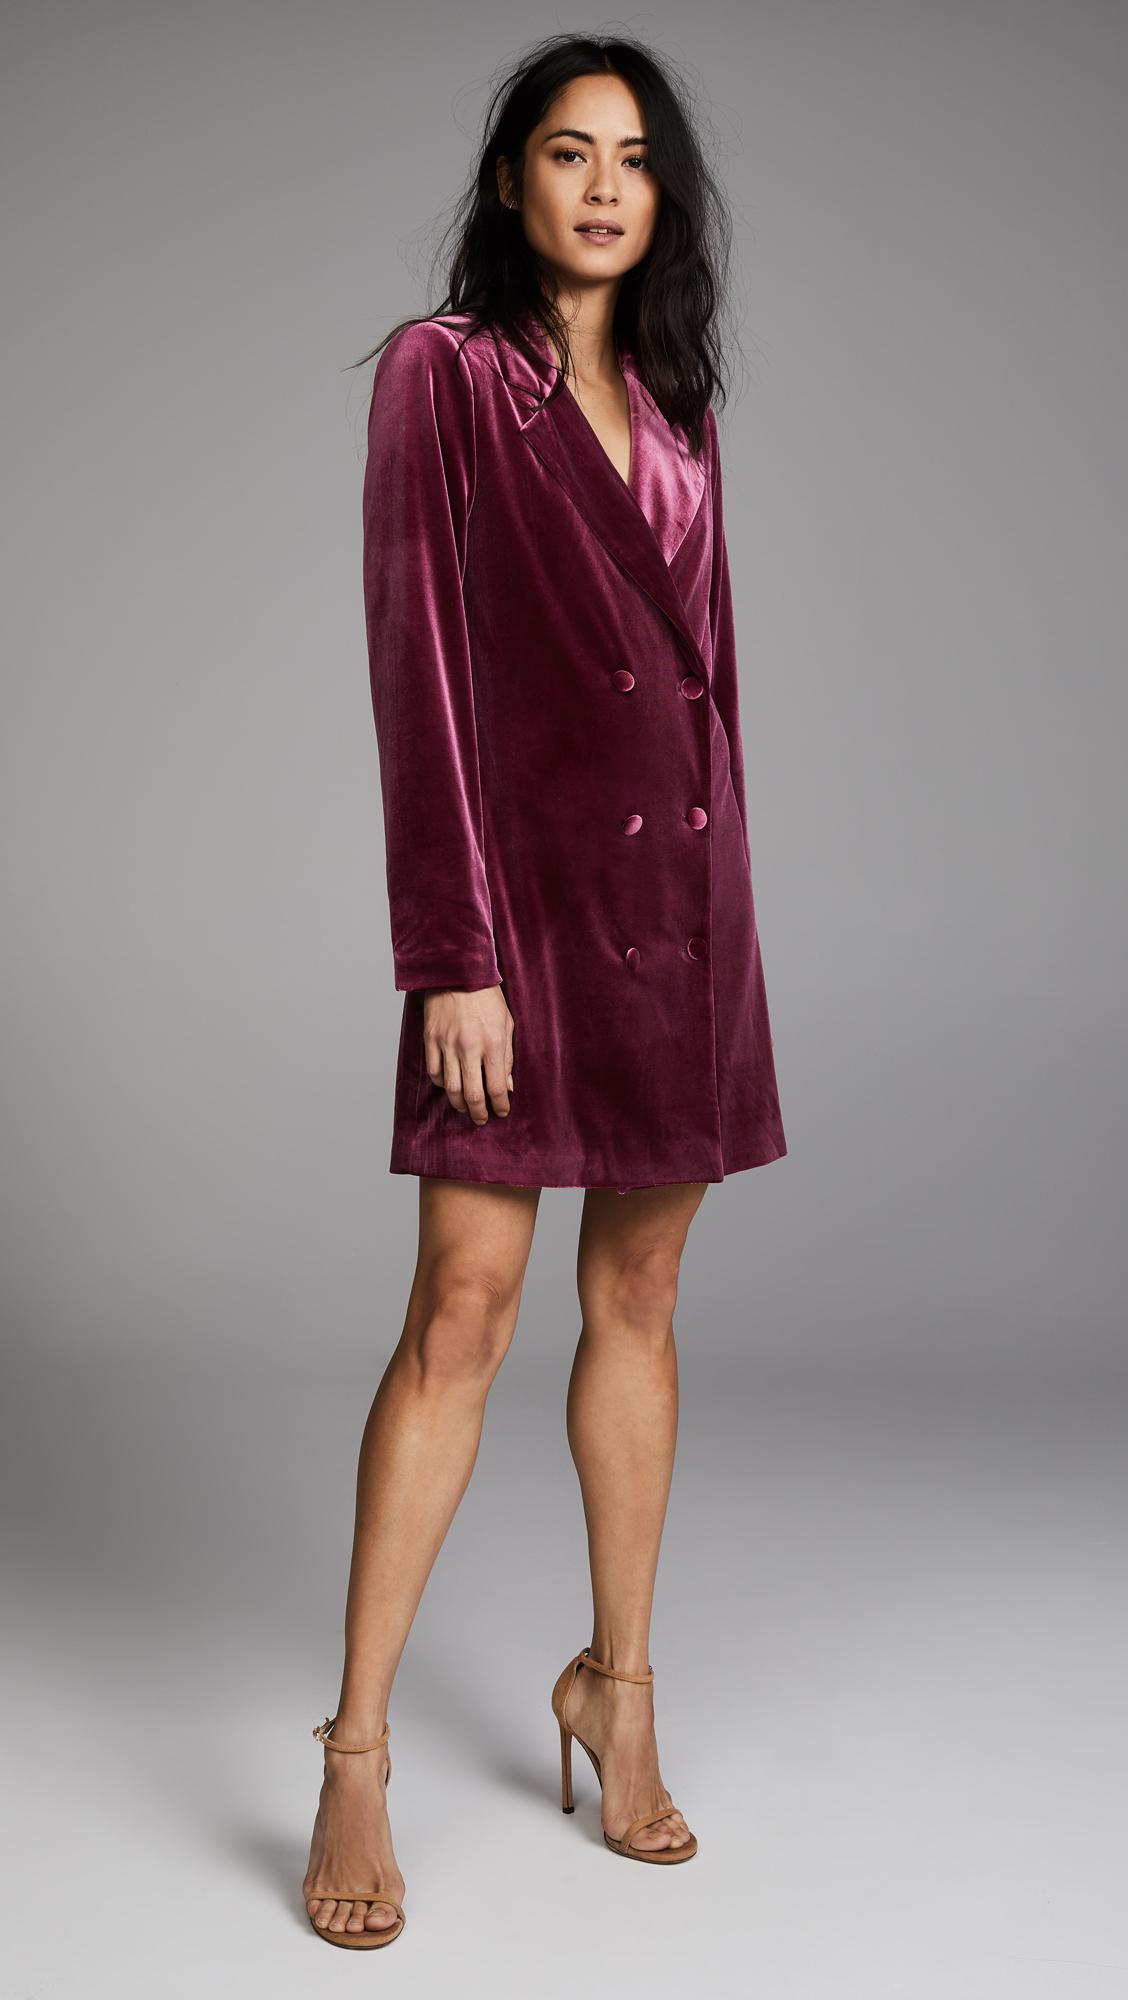 Lyst - Yumi Kim Suit Up Dress in Purple